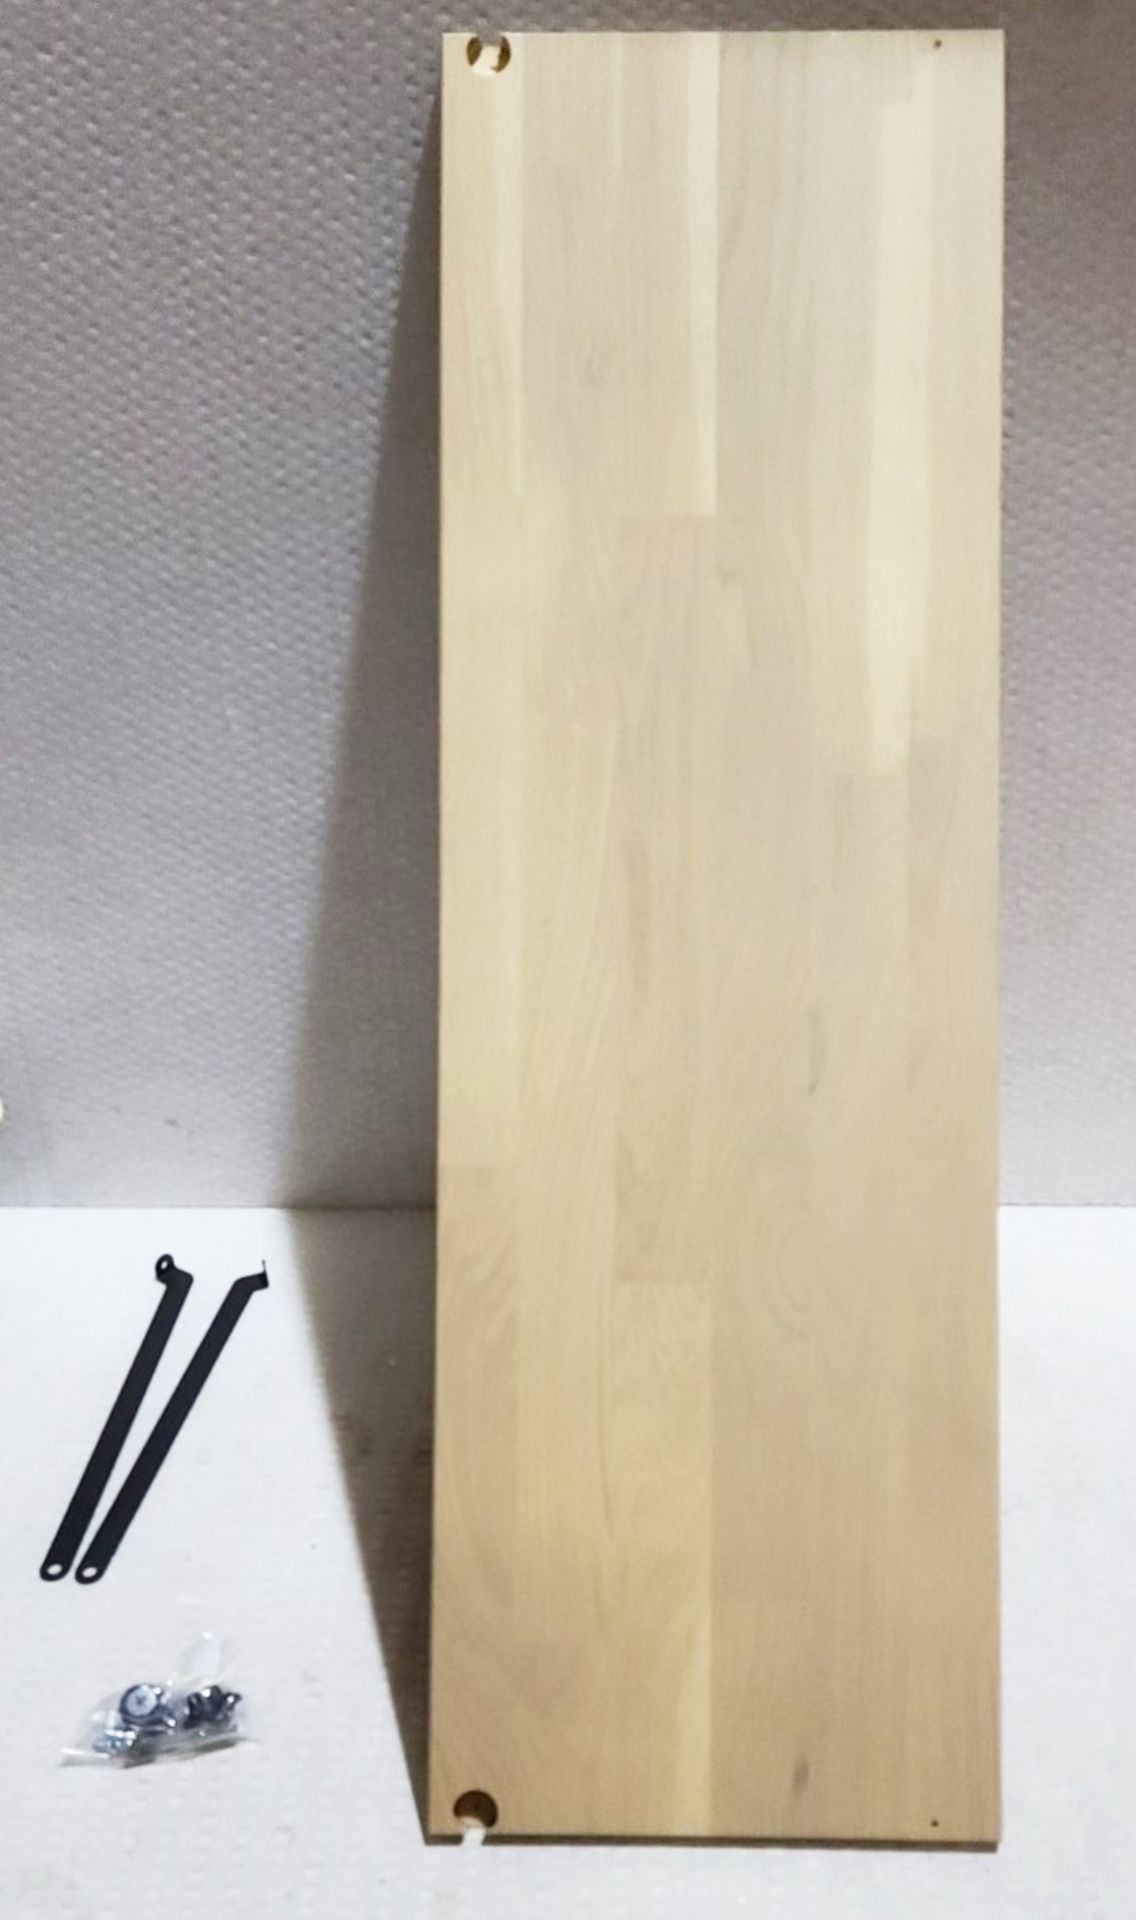 1 x WOOOD 'Gyan Legplank' Light Oak Shelf With Black Metal Braces 80cm - Image 7 of 7